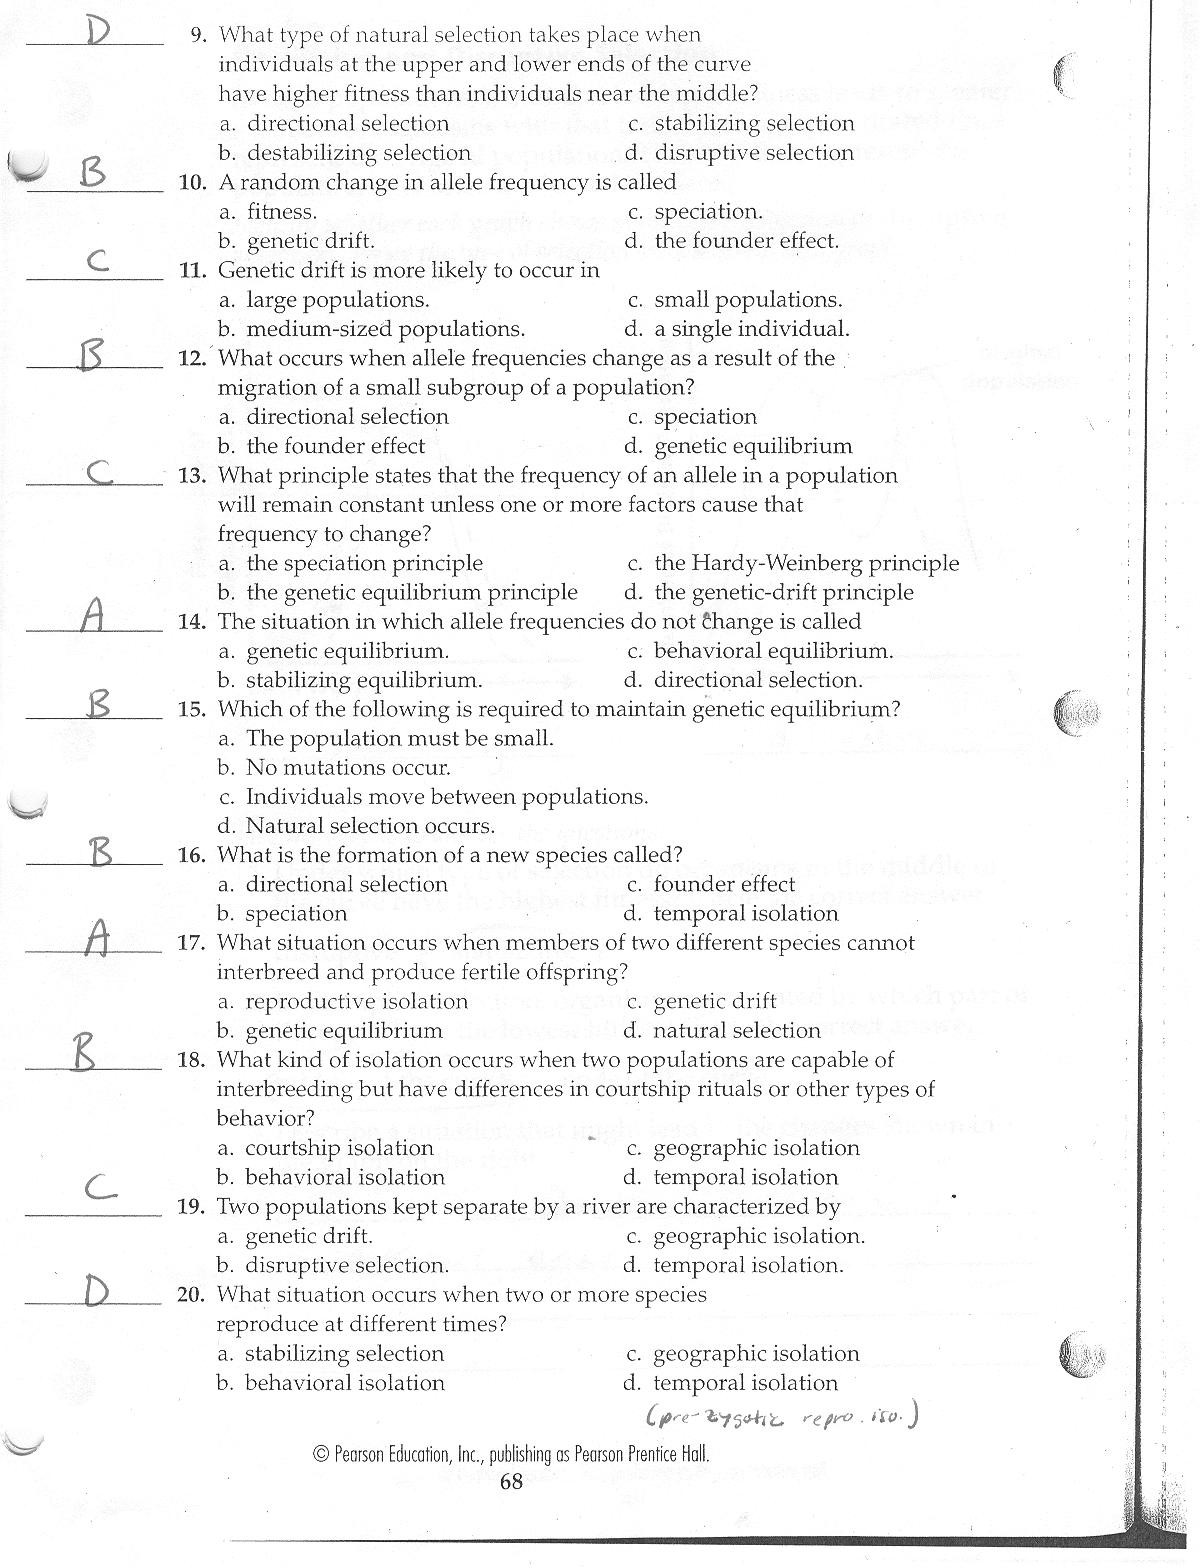 Meiosis Worksheet Vocabulary Answers Straubel Biology 2010 2011